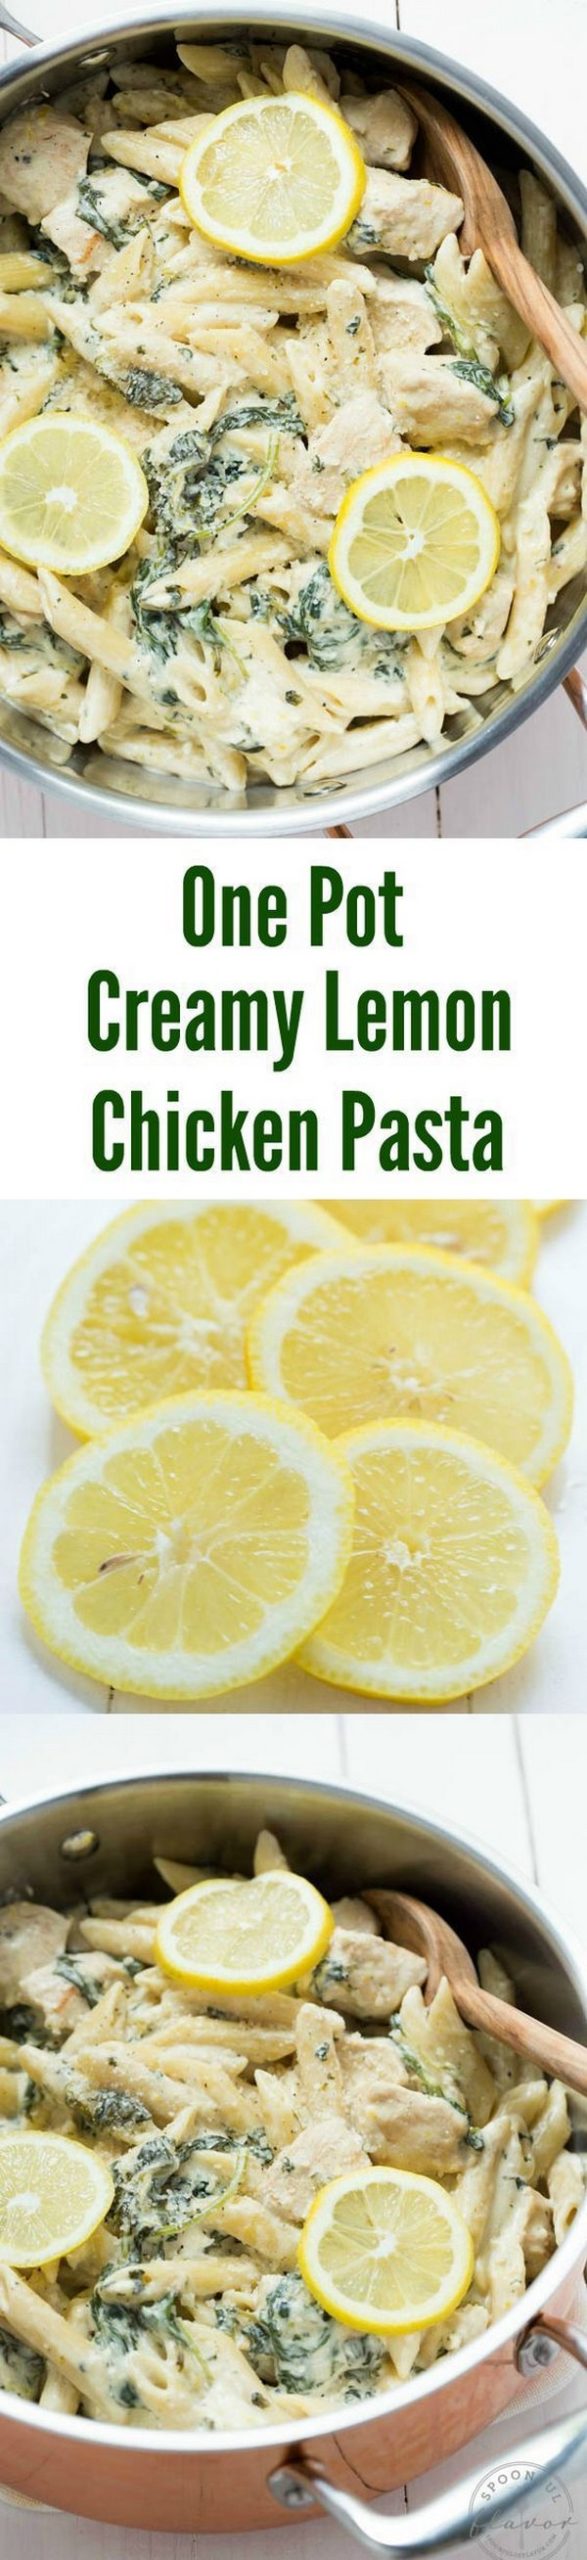 One-Pot Creamy Lemon Chicken Pasta With Baby Kale